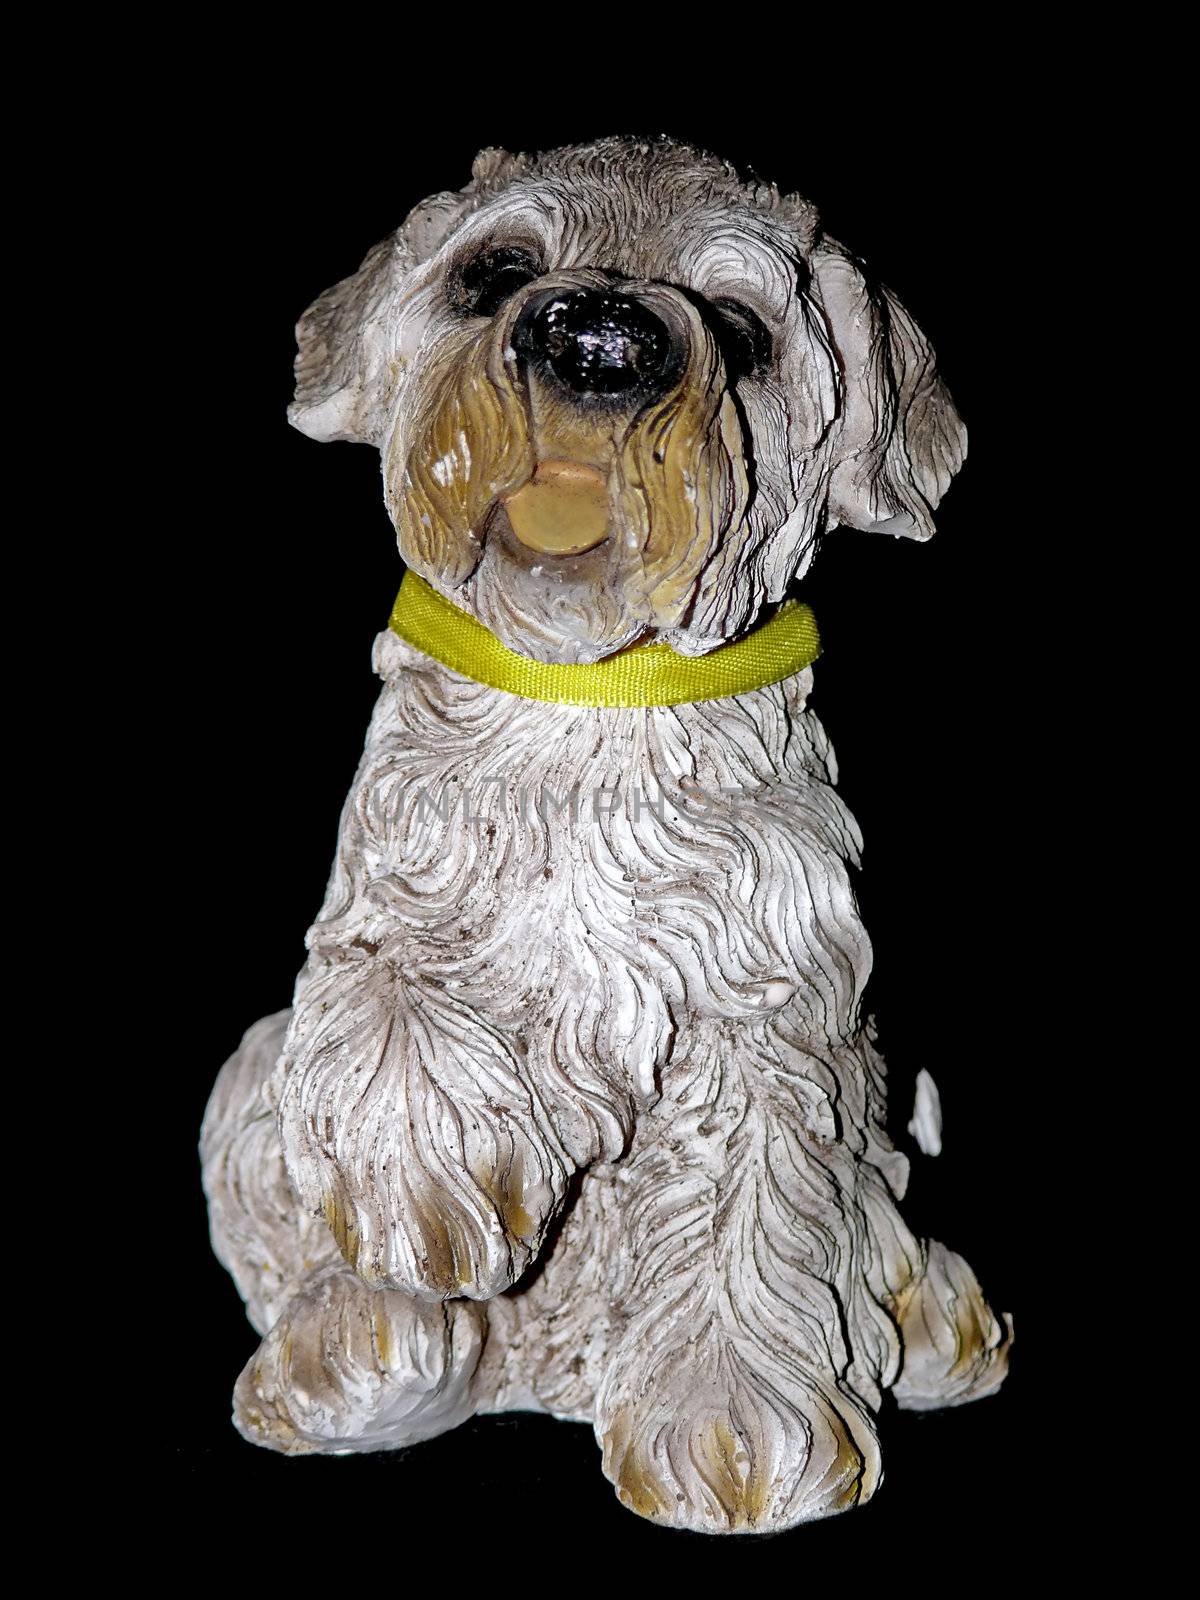 portrait of dog statue on black background